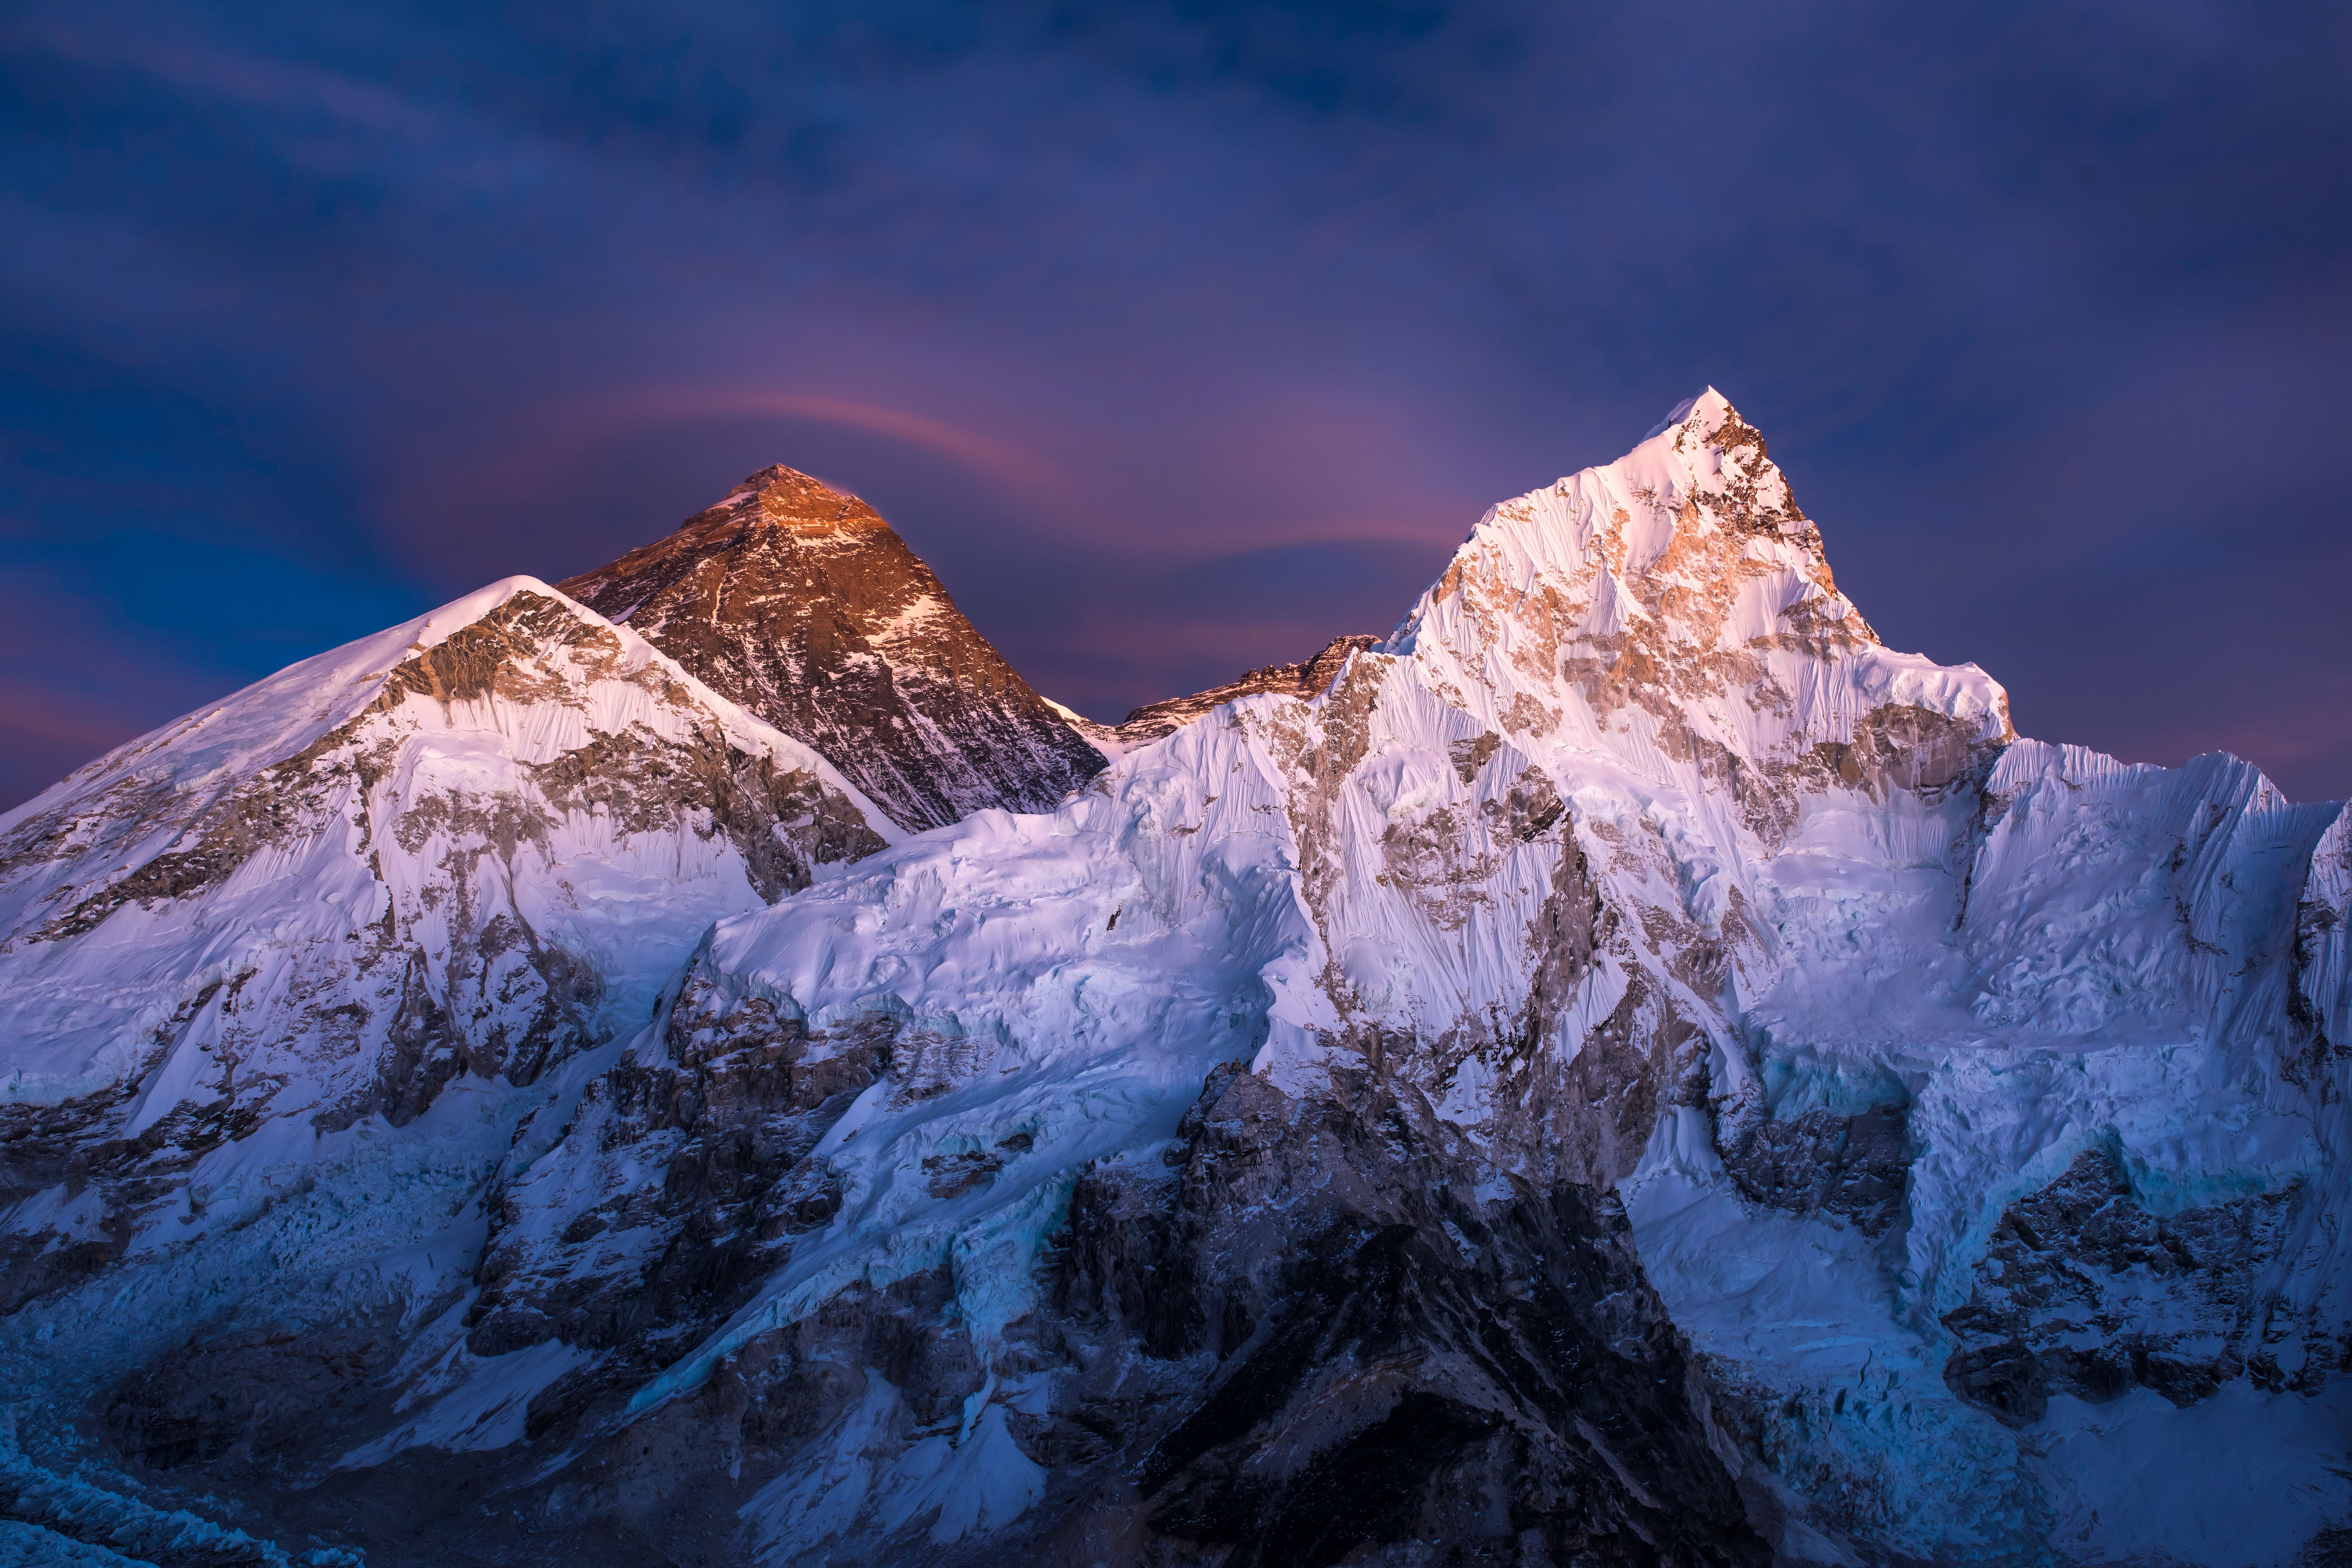 Mount Everest und Lhotse